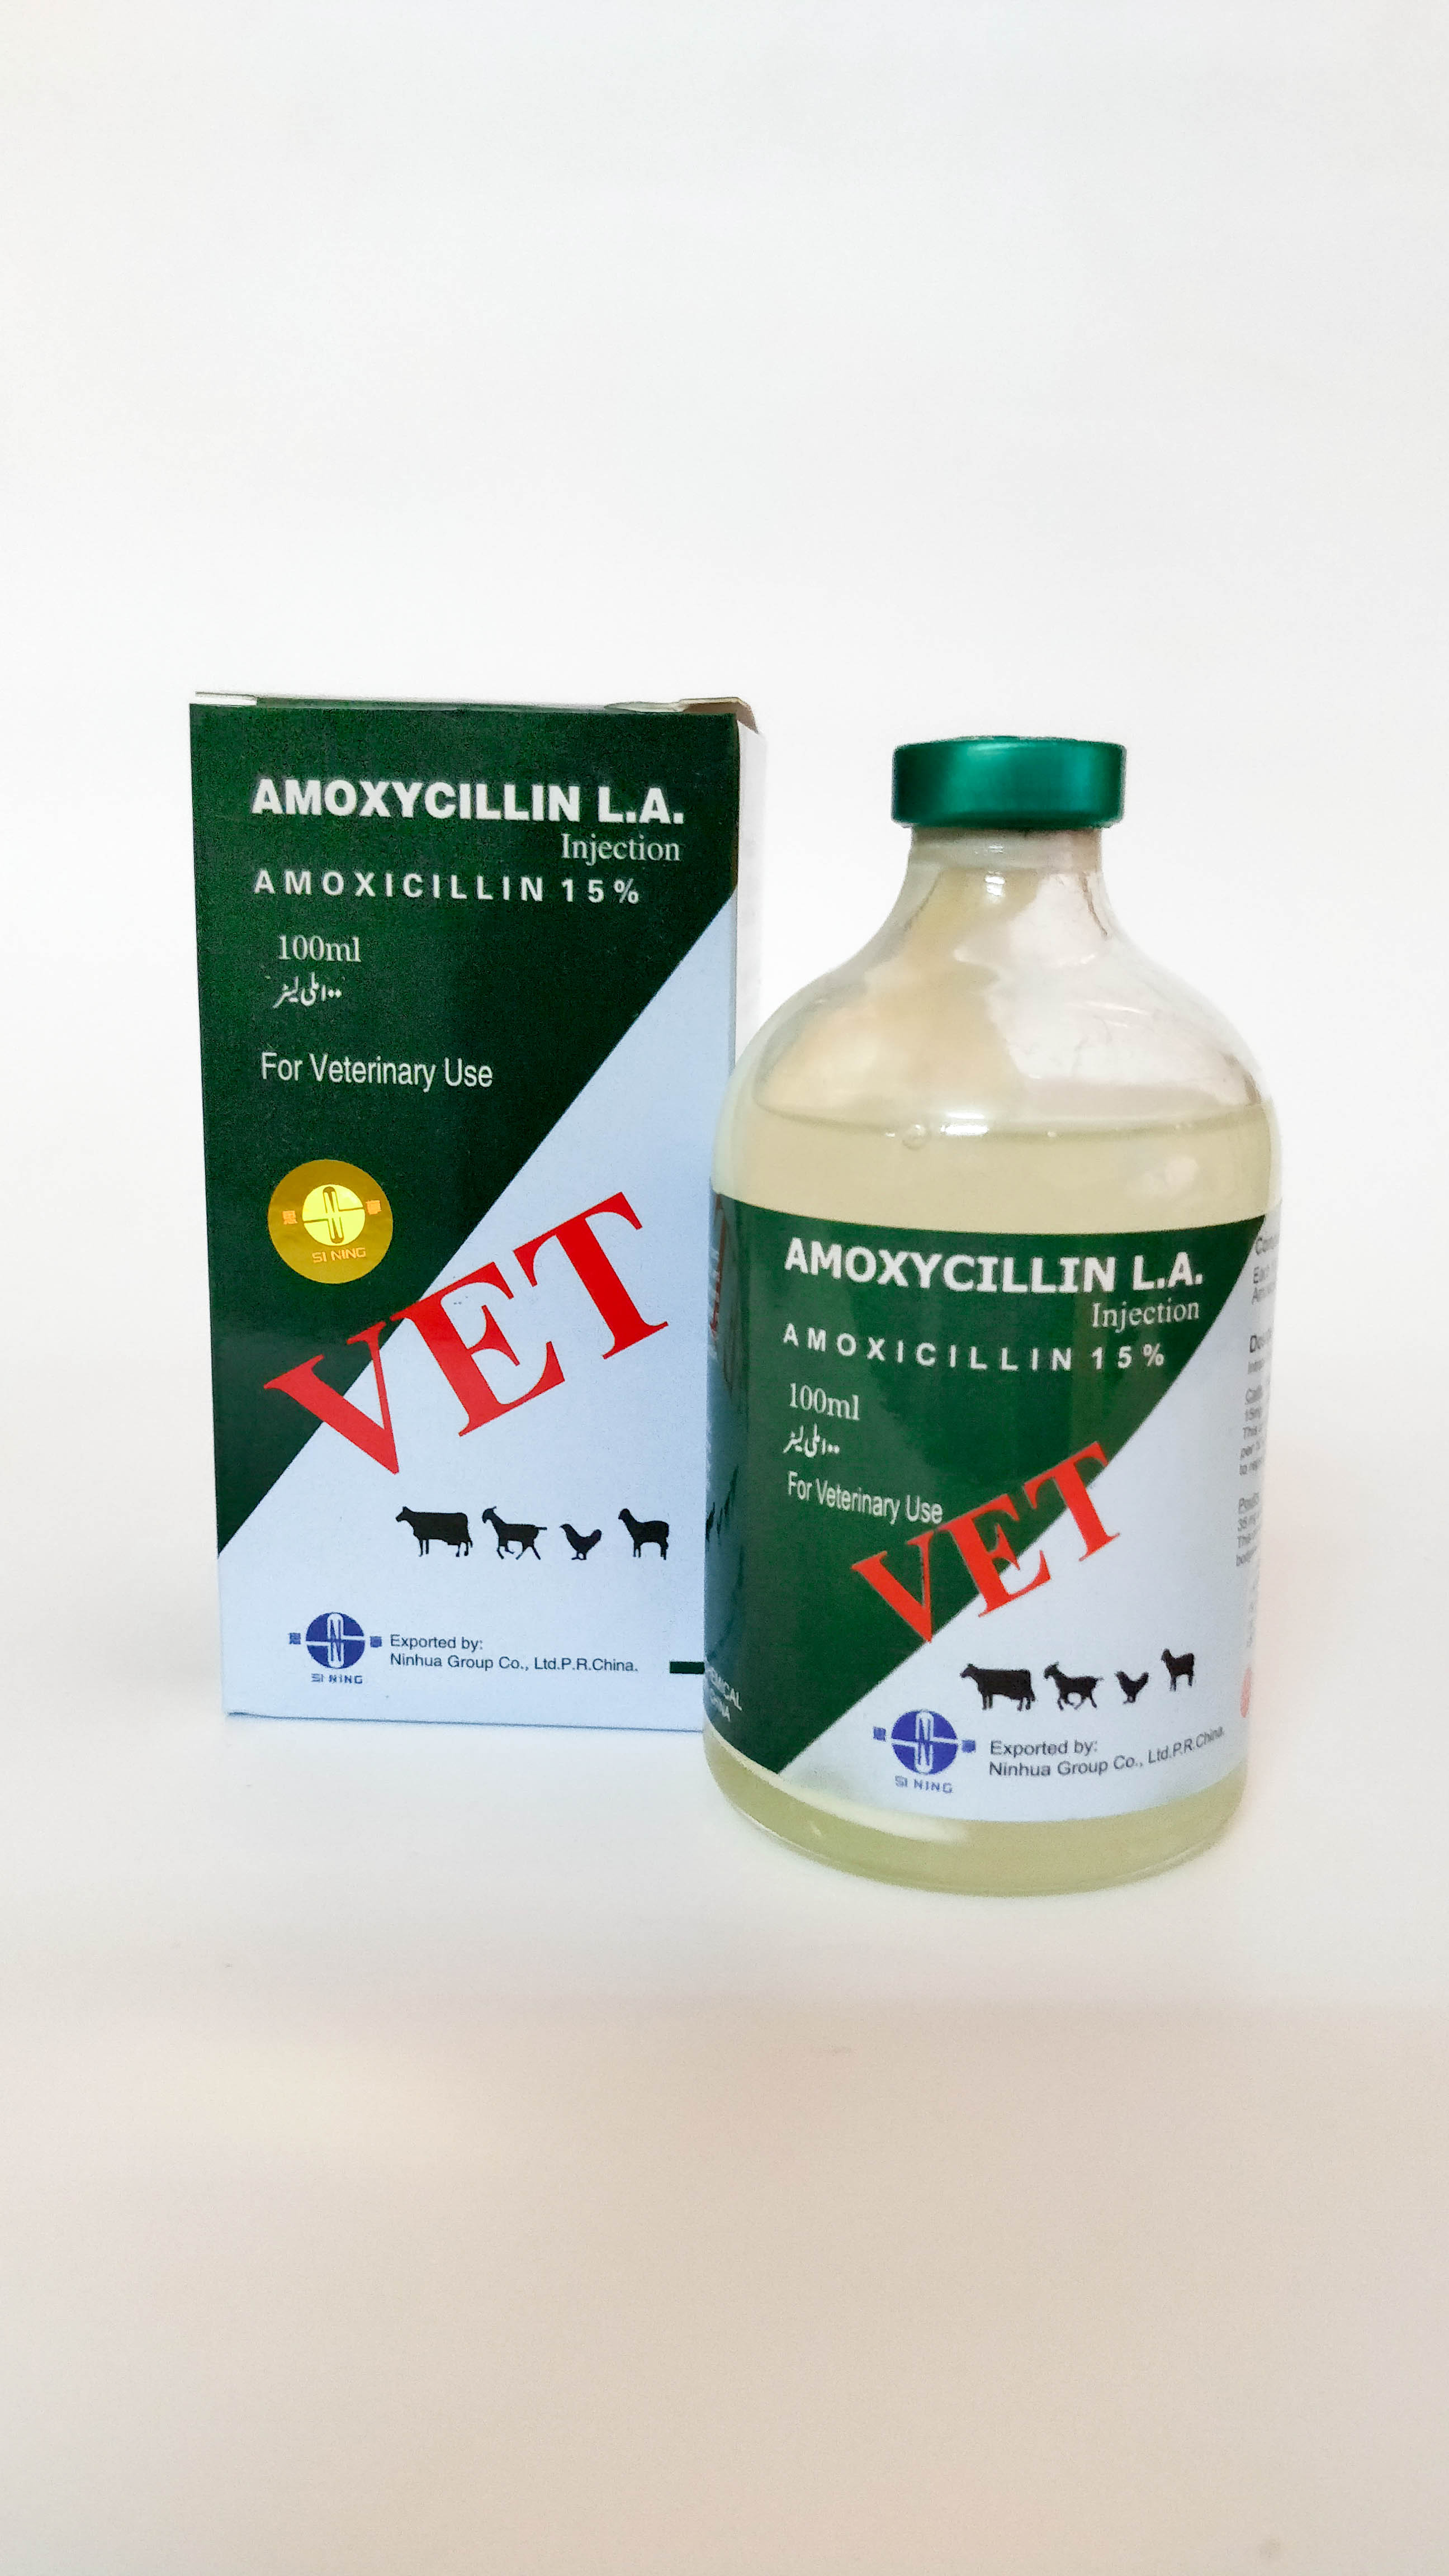 Amoxycillin LA 15% Injection 100ml